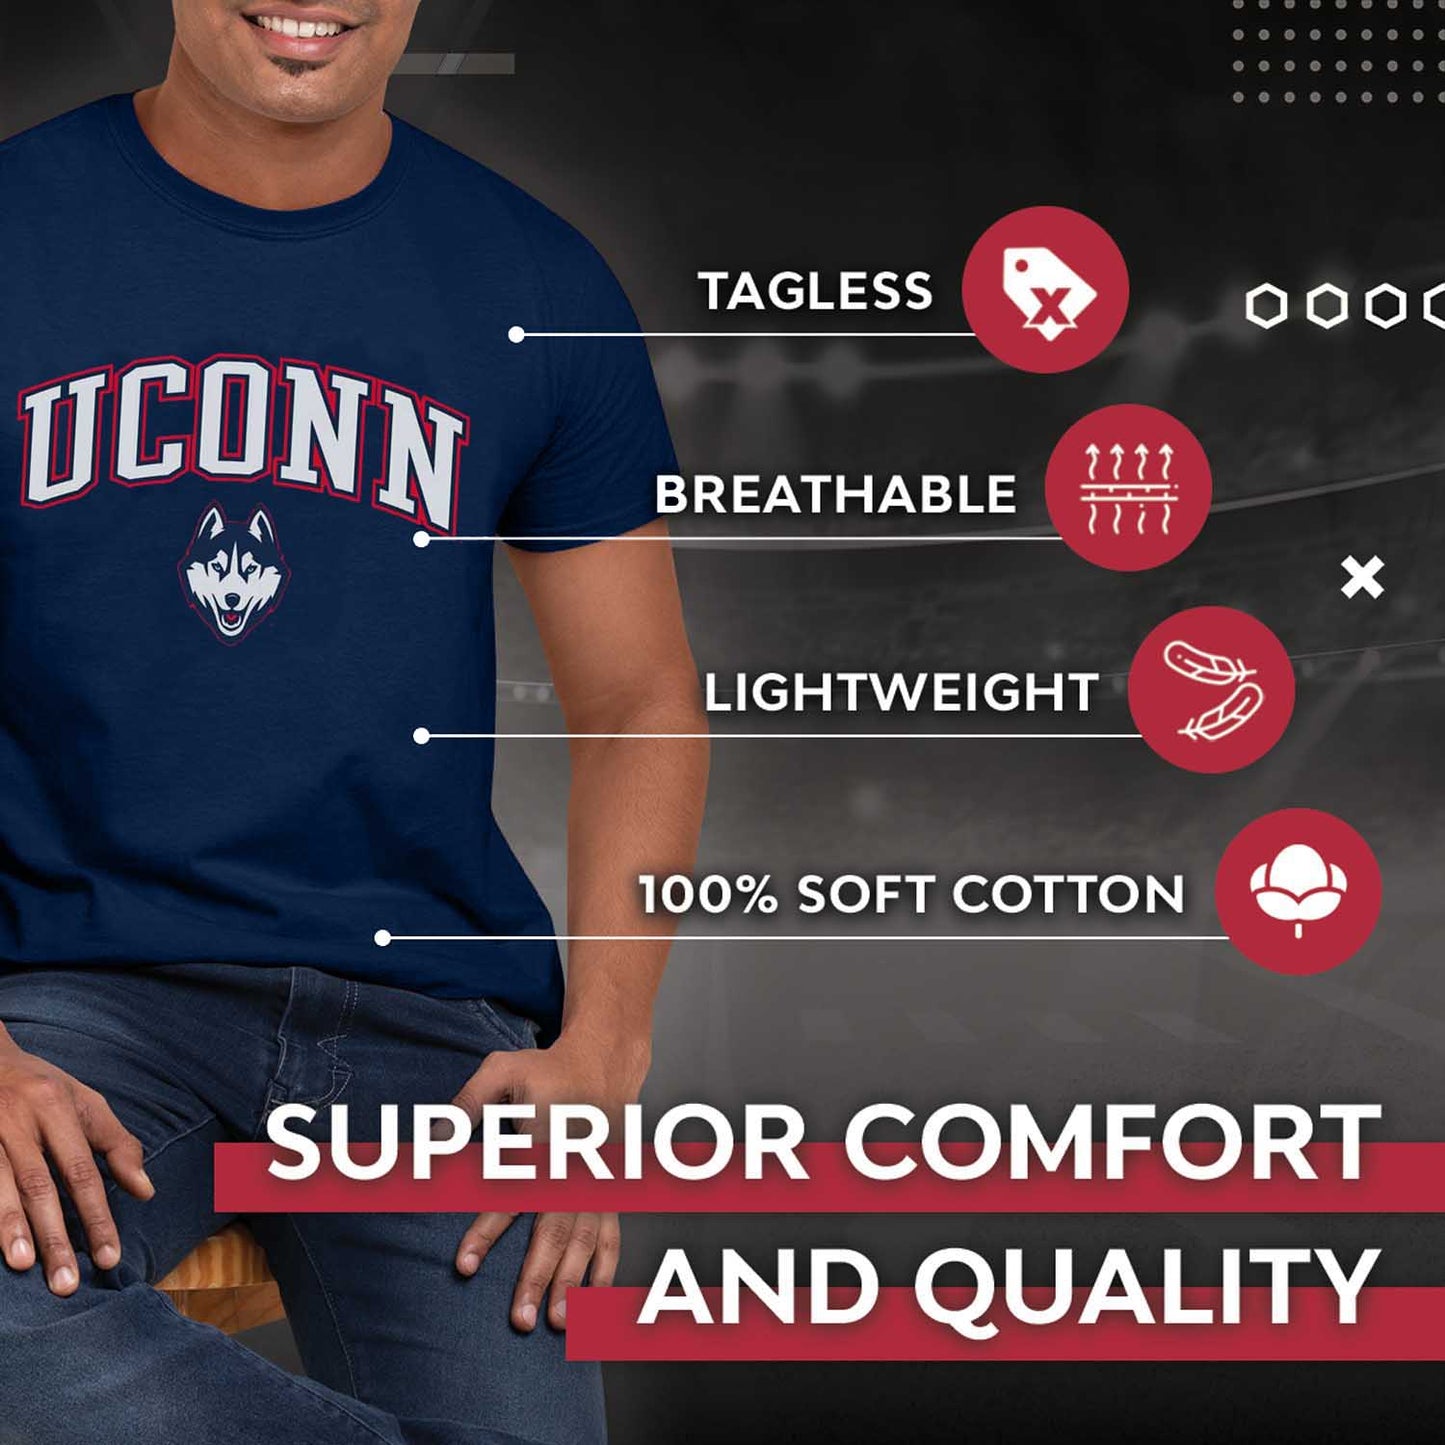 UCONN Huskies NCAA Adult Gameday Cotton T-Shirt - Navy